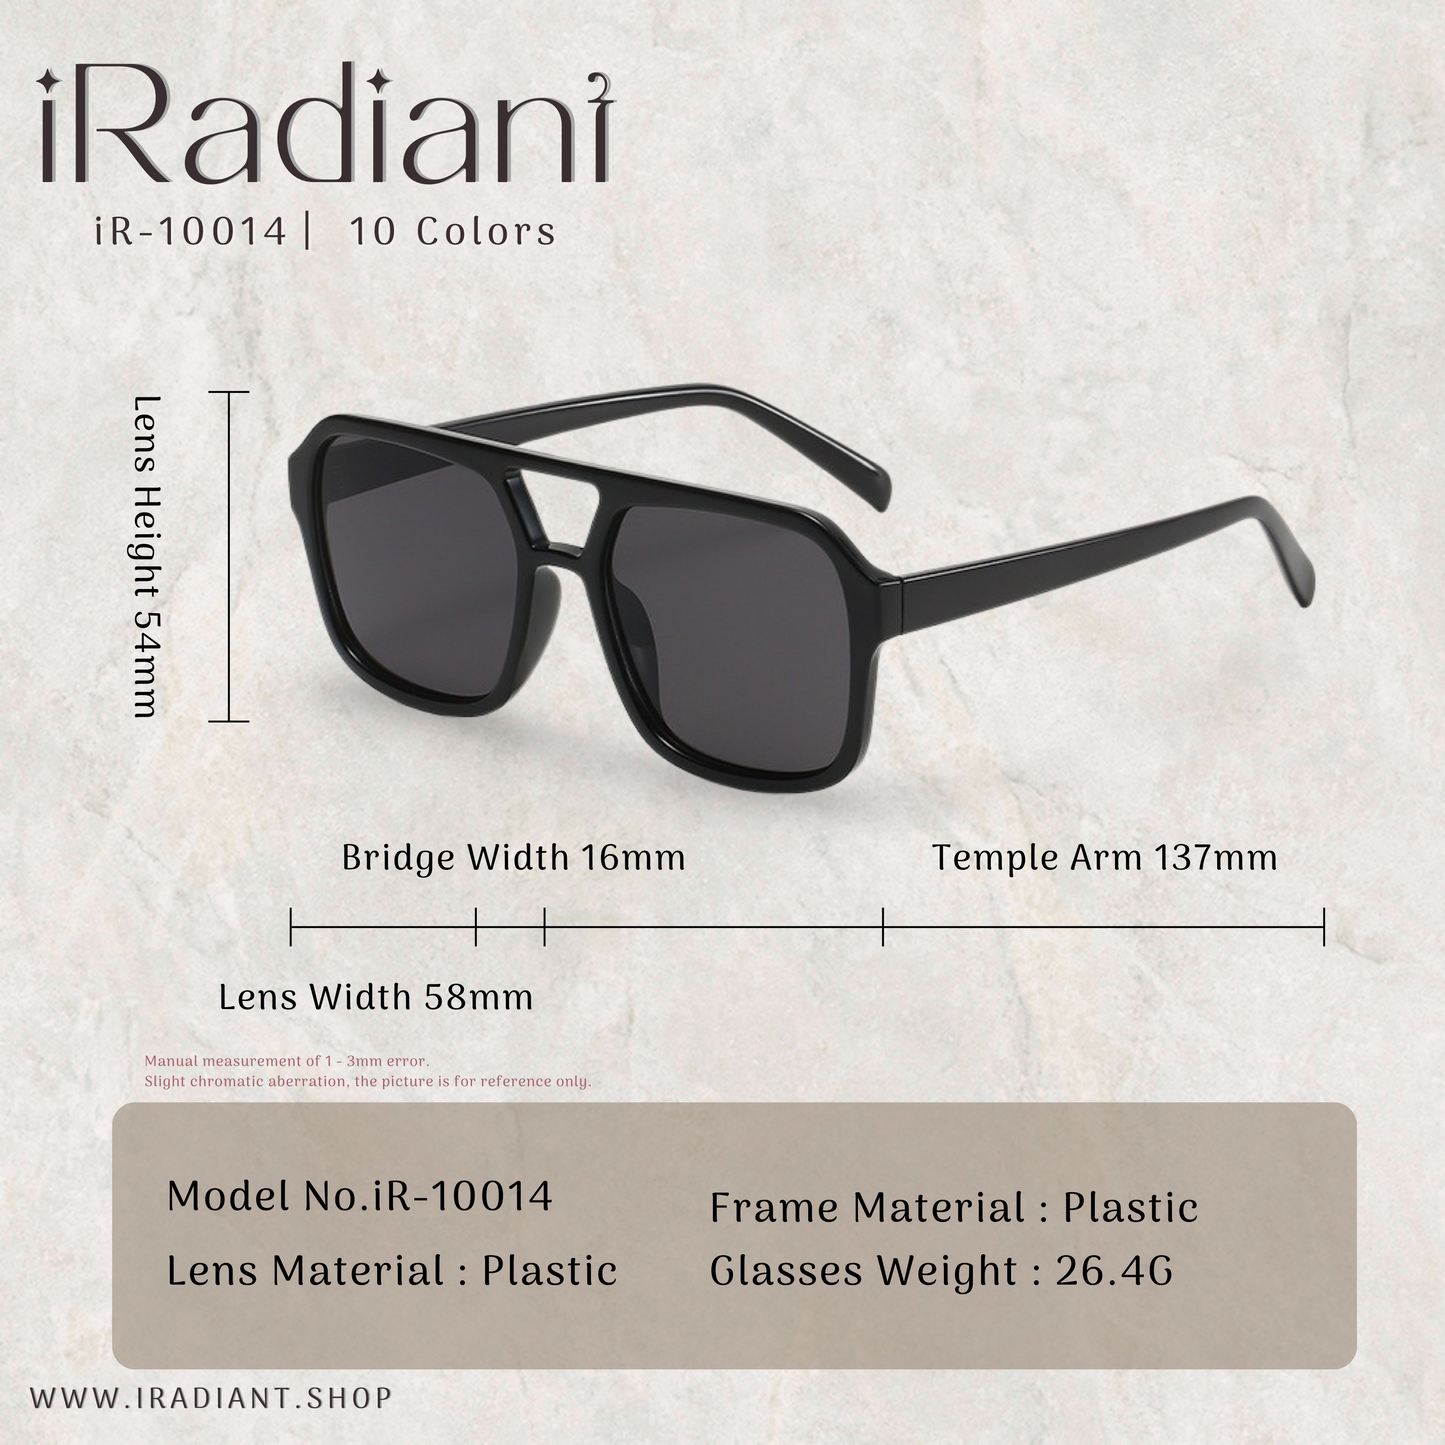 iR-10014-A ︳iRadiant Classic Rectangle Shades ︳Unisex ︳Black x Grey